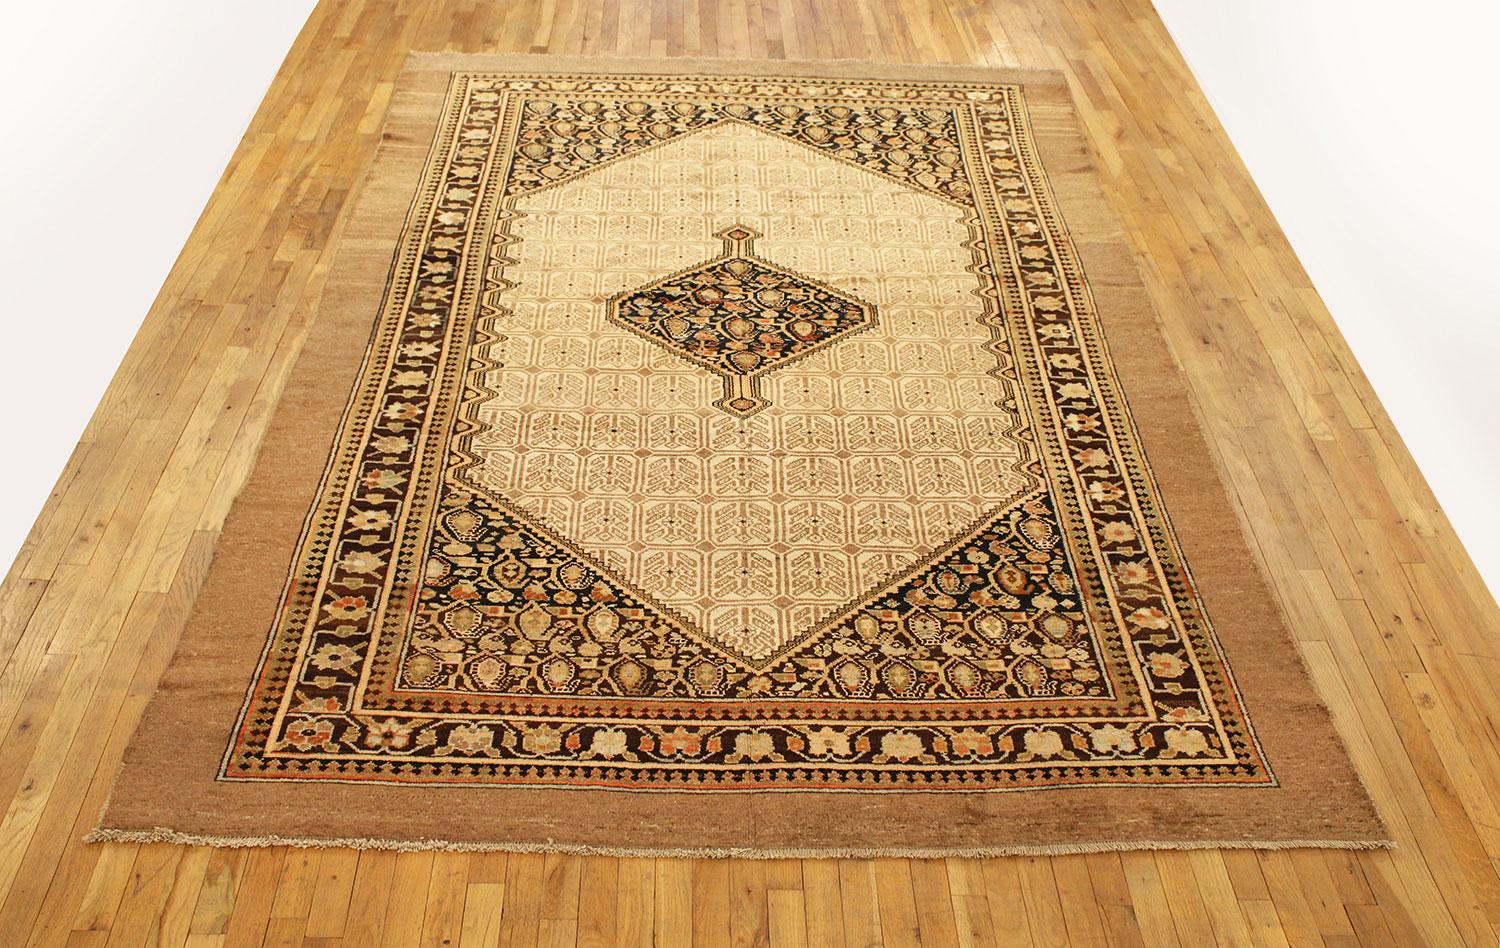 Antique Persian Serab Oriental rug, room size.

An antique Persian Serab oriental rug, size 11'7